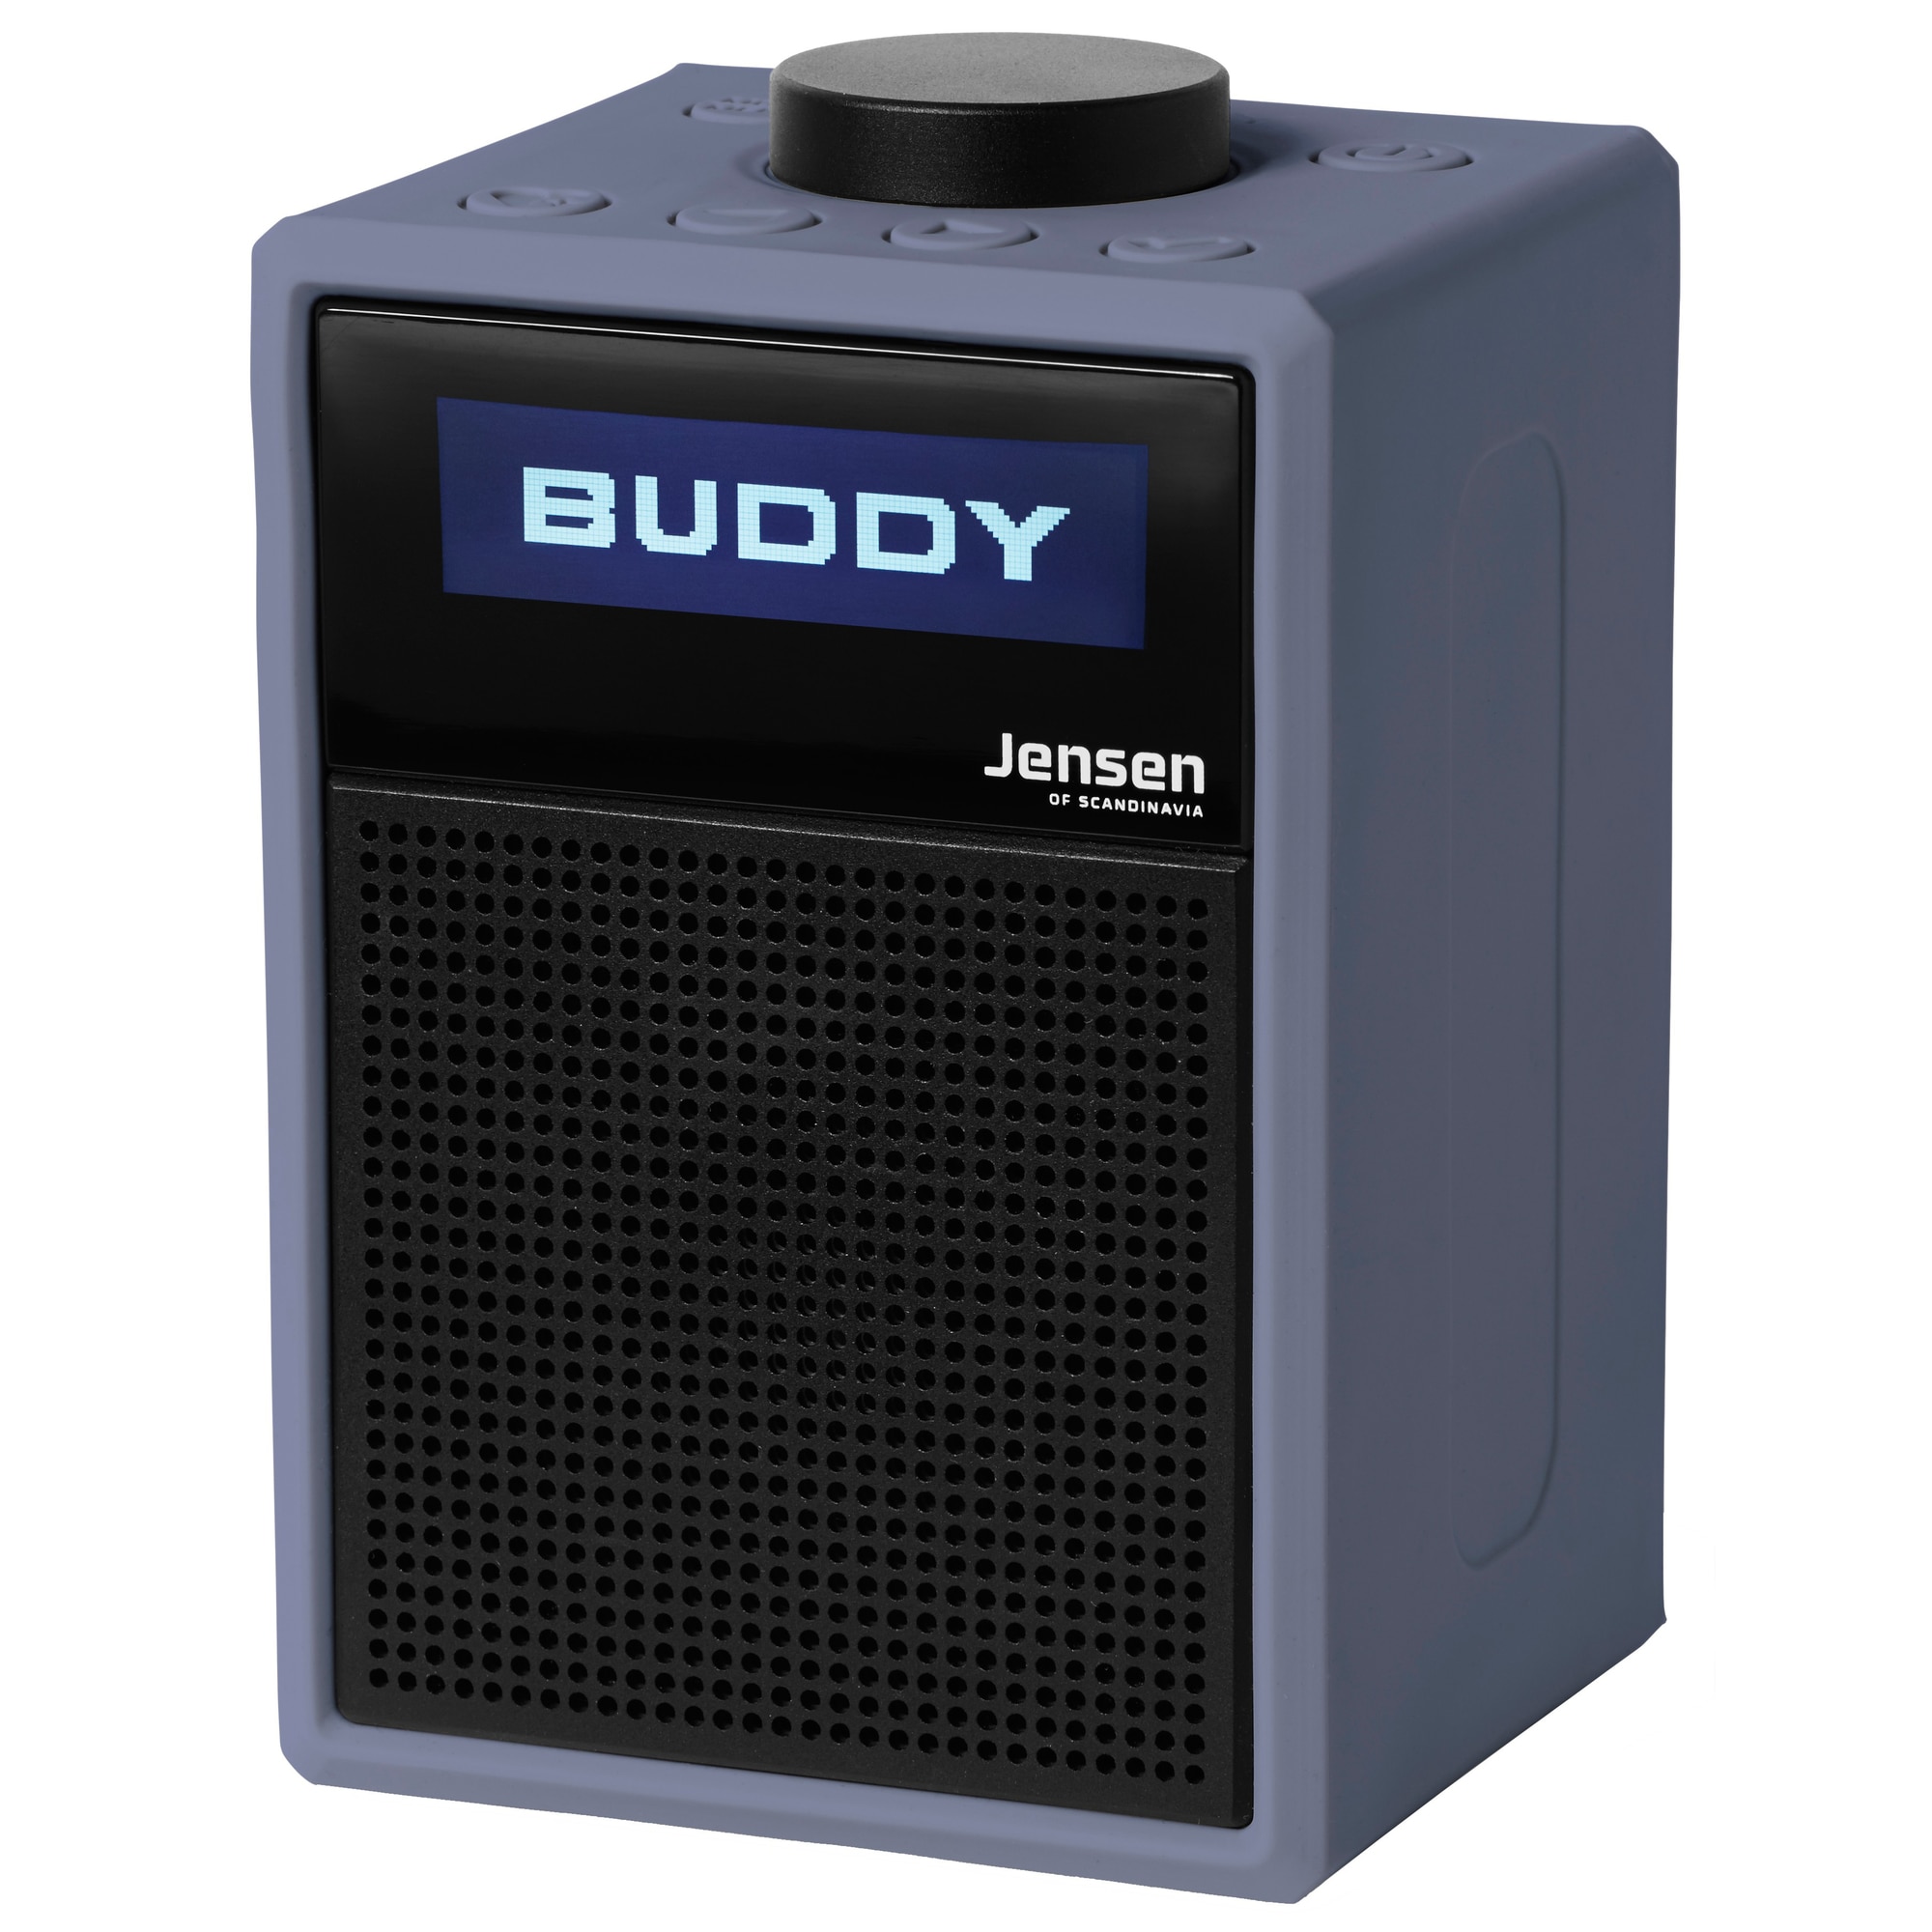 Jensen Buddy Lite DAB+ radio (blå) - Elkjøp